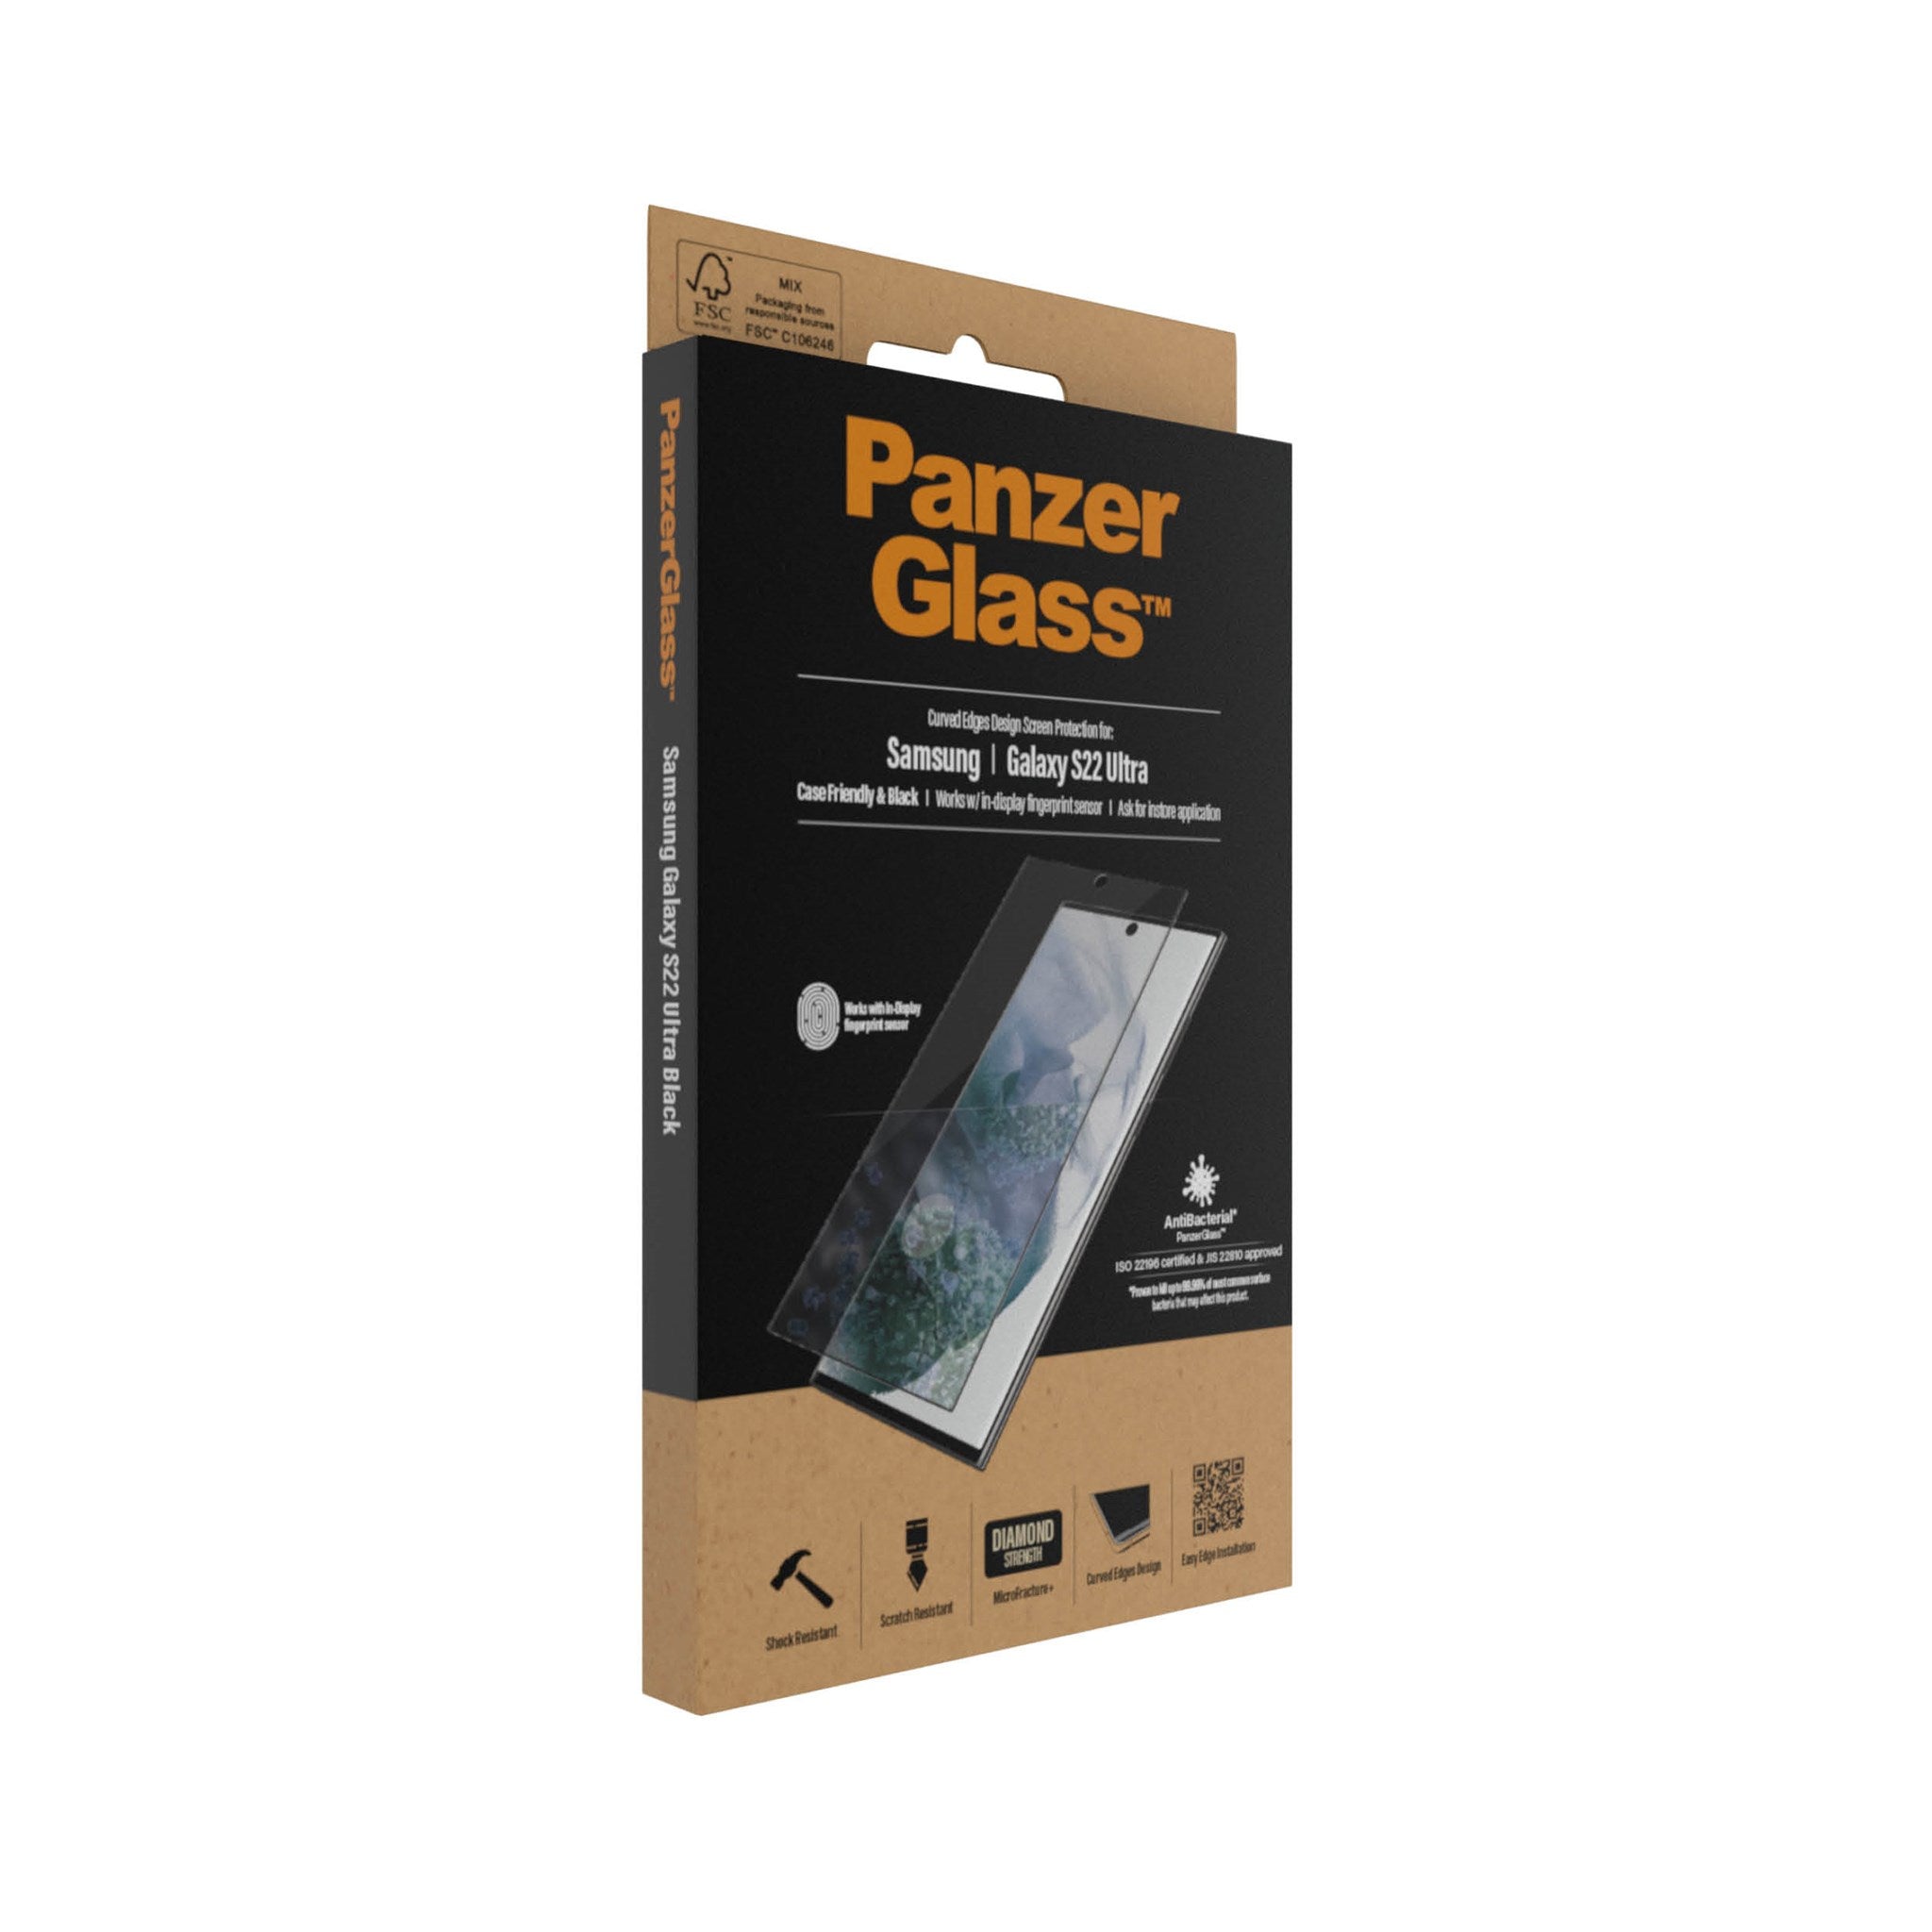 PanzerGlass Ultra UltraForce1 Samsung Galaxy S22 Ultra ab 8,99